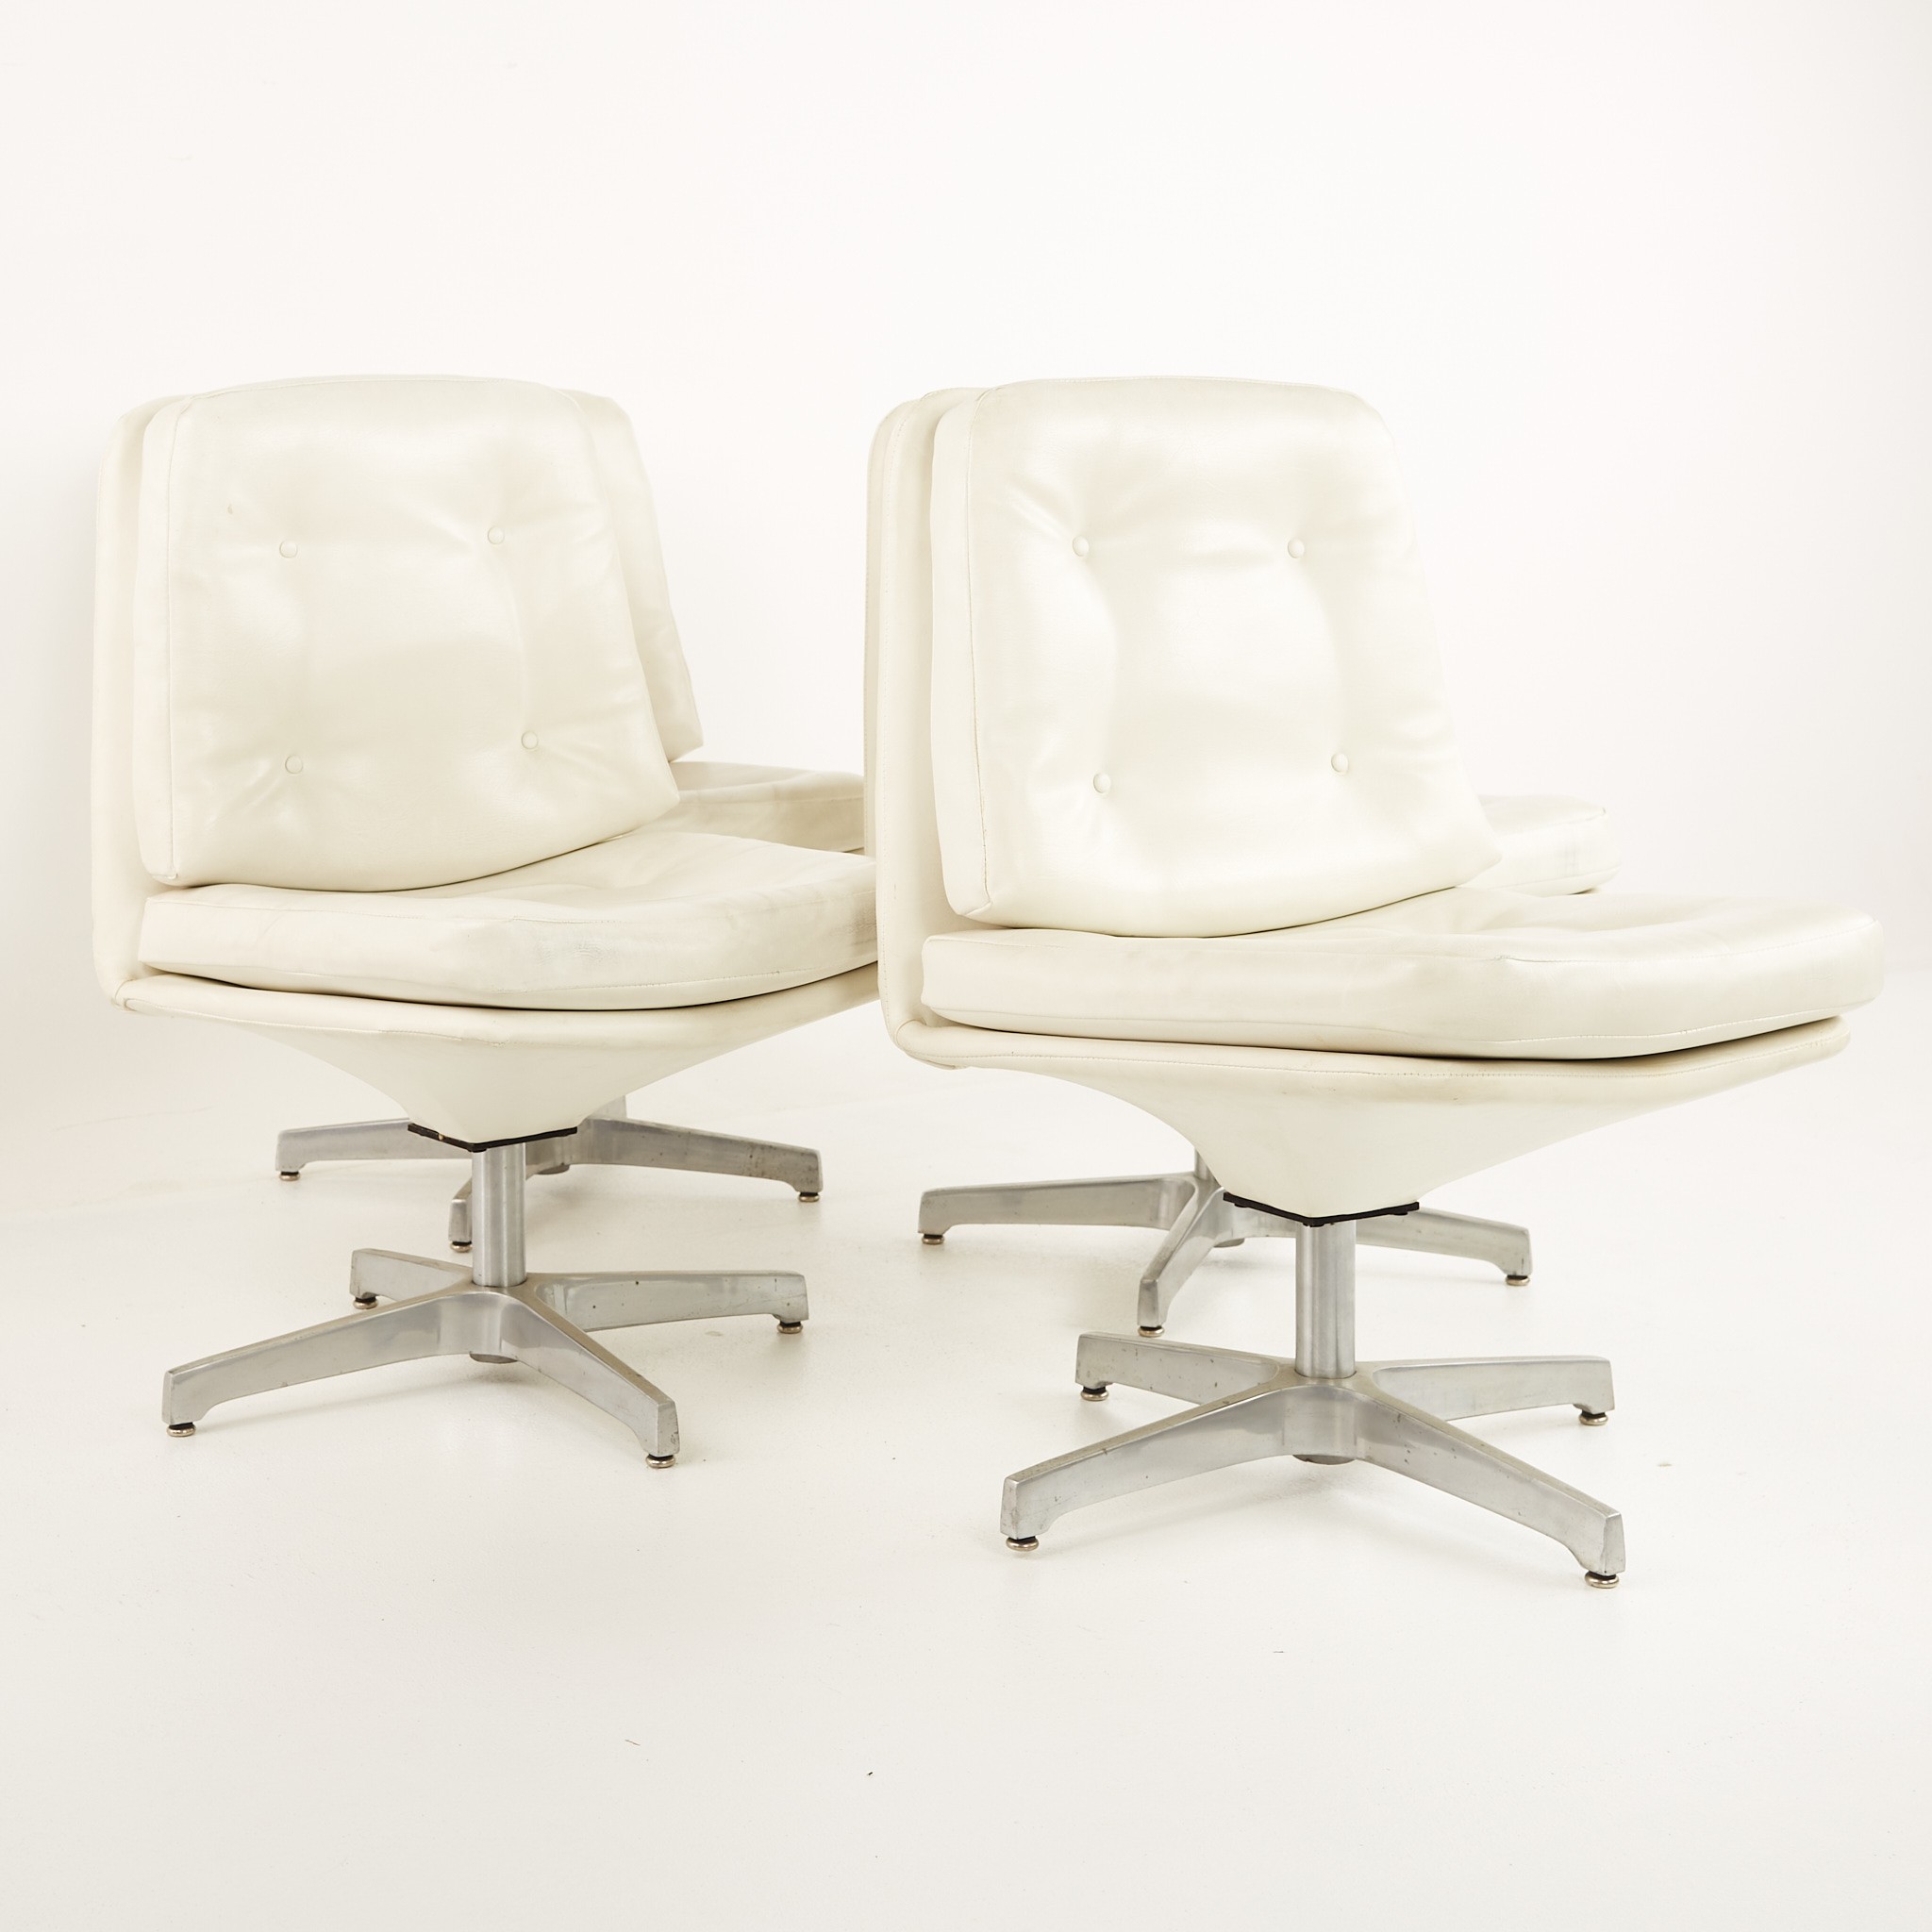 Chromcraft Style Mid Century White Vinyl and Aluminum Tufted Swivel Dining Chairs  - Set of 4